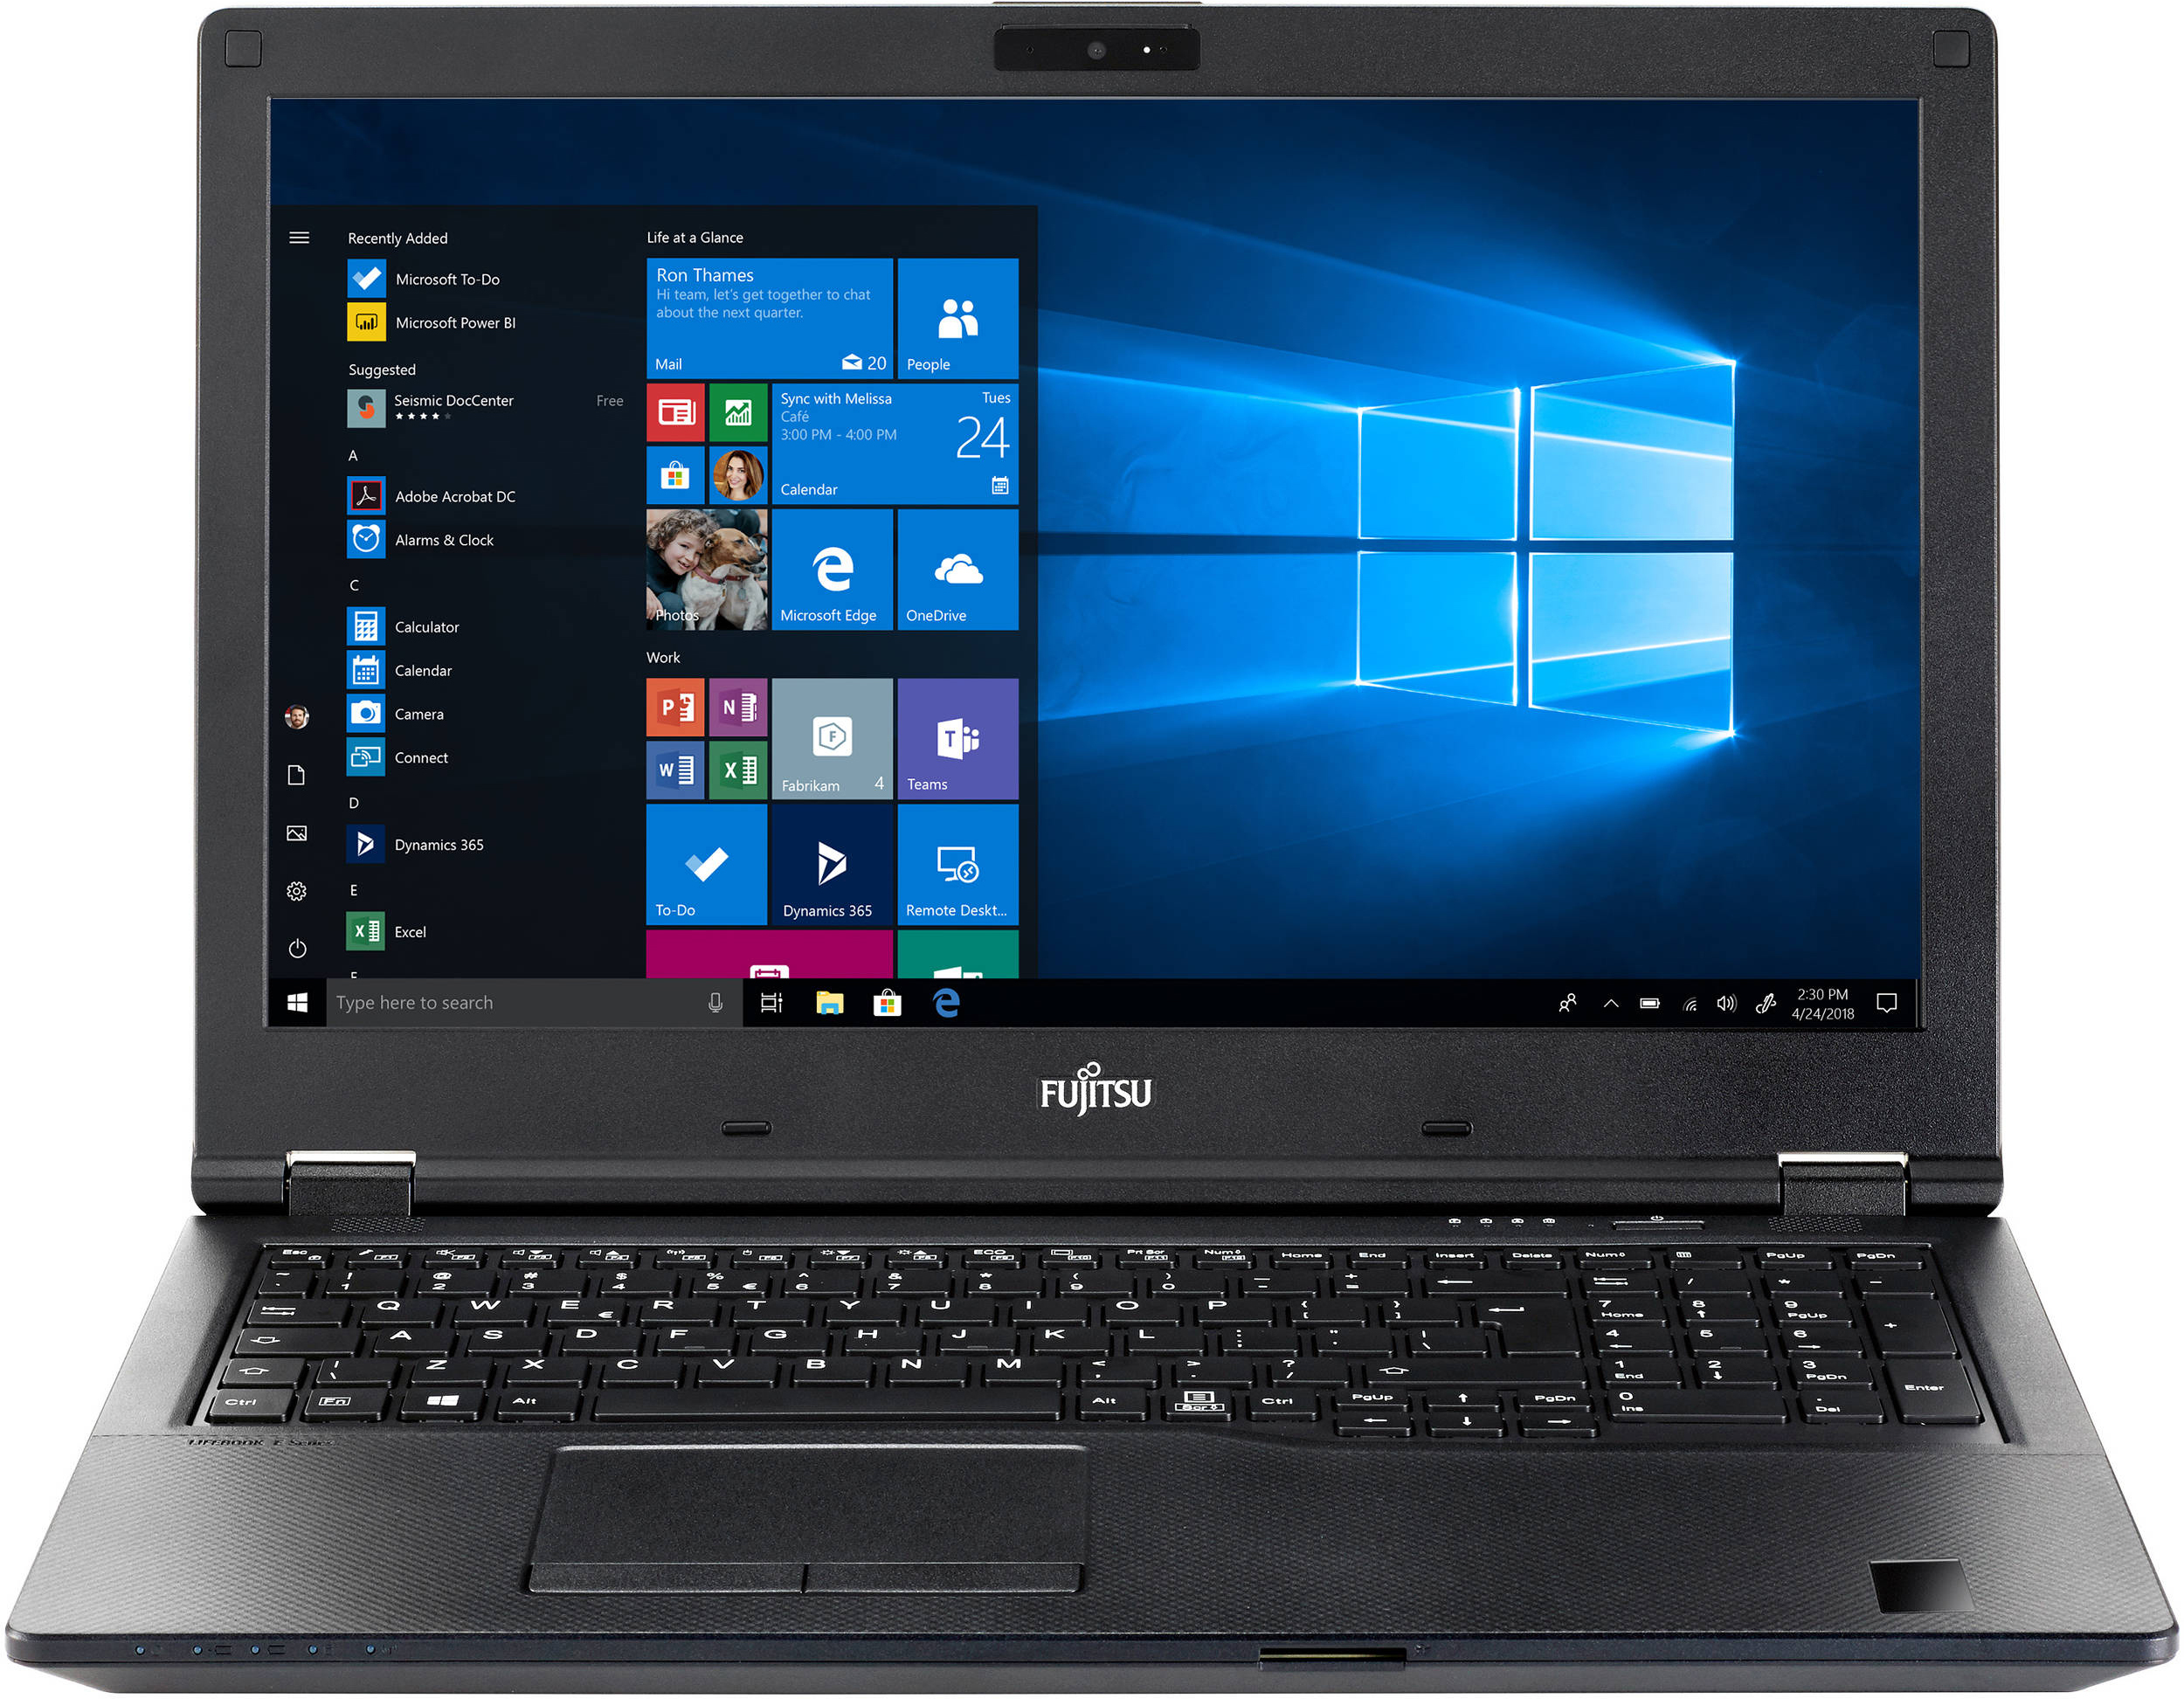 Laptop Fujitsu Lifebook E559 L00E559VN00000049 - Intel Core i5-8265U, 8GB RAM, SSD 256GB, Intel UHD Graphics 620, 15.6 inch